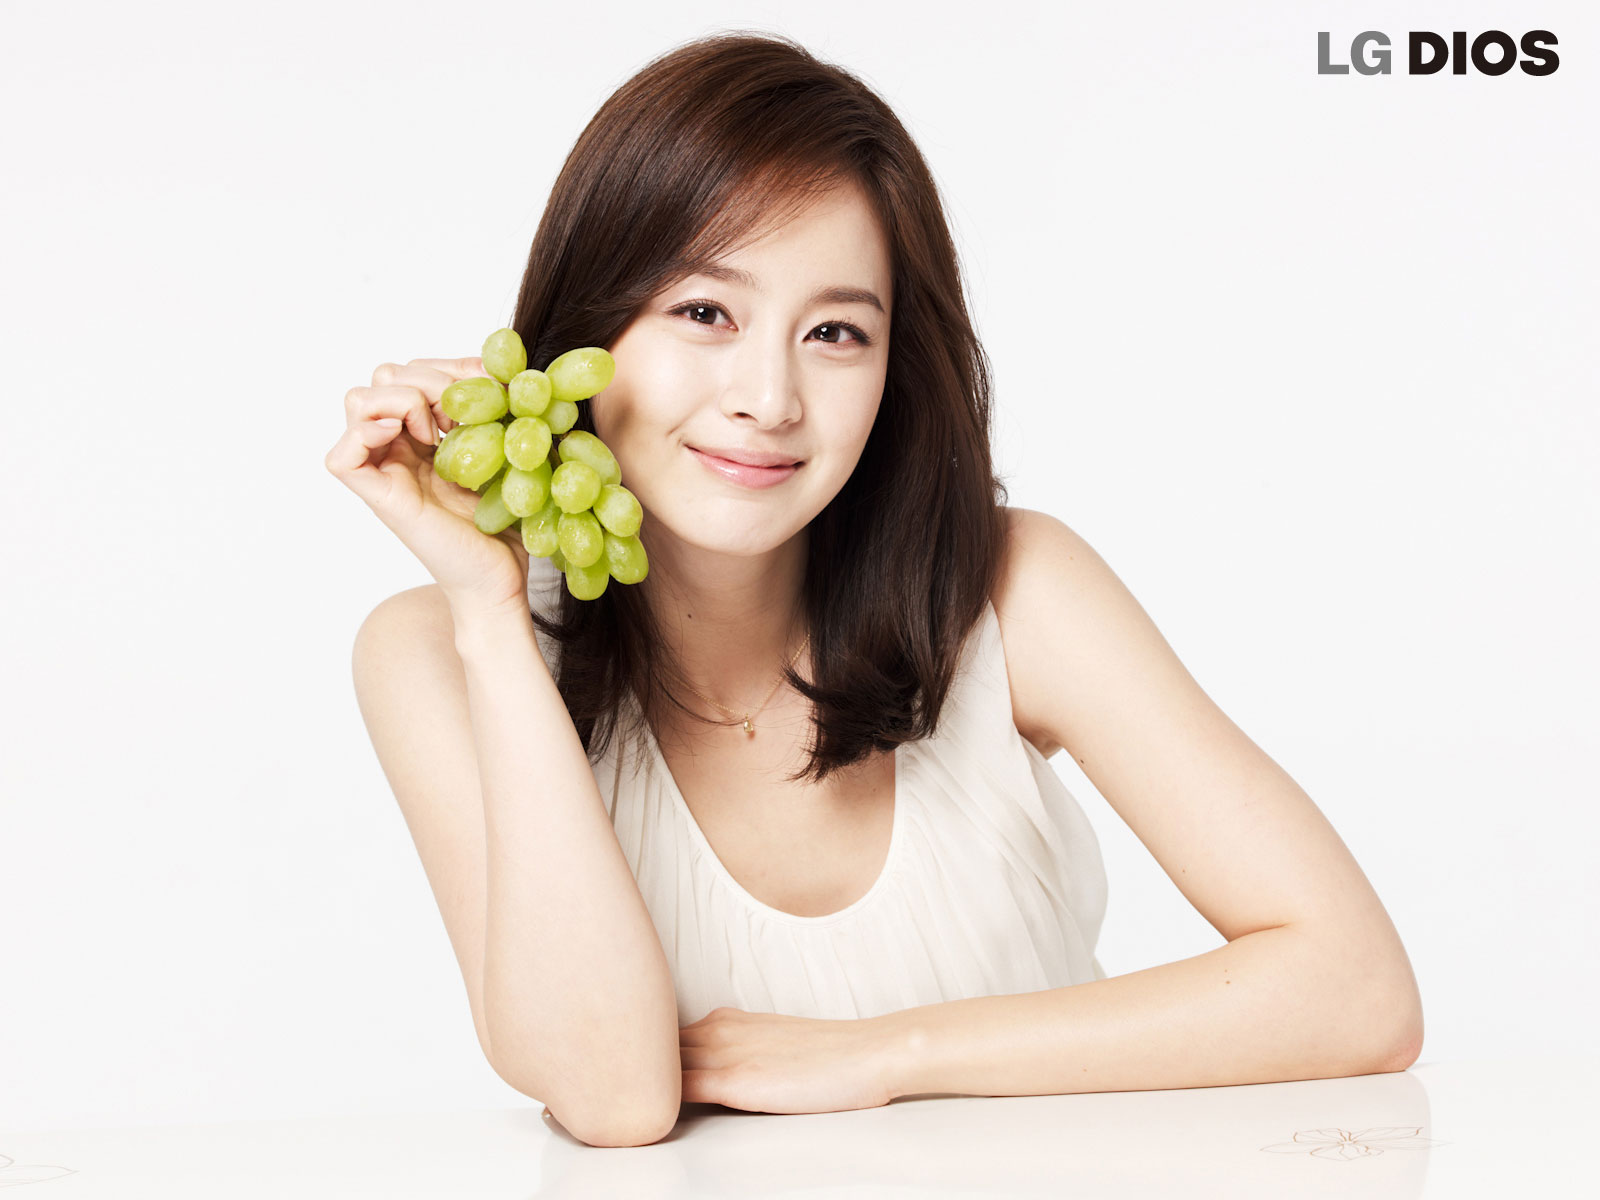 Kim Tae Hee LG DIOS 2011 advertisement